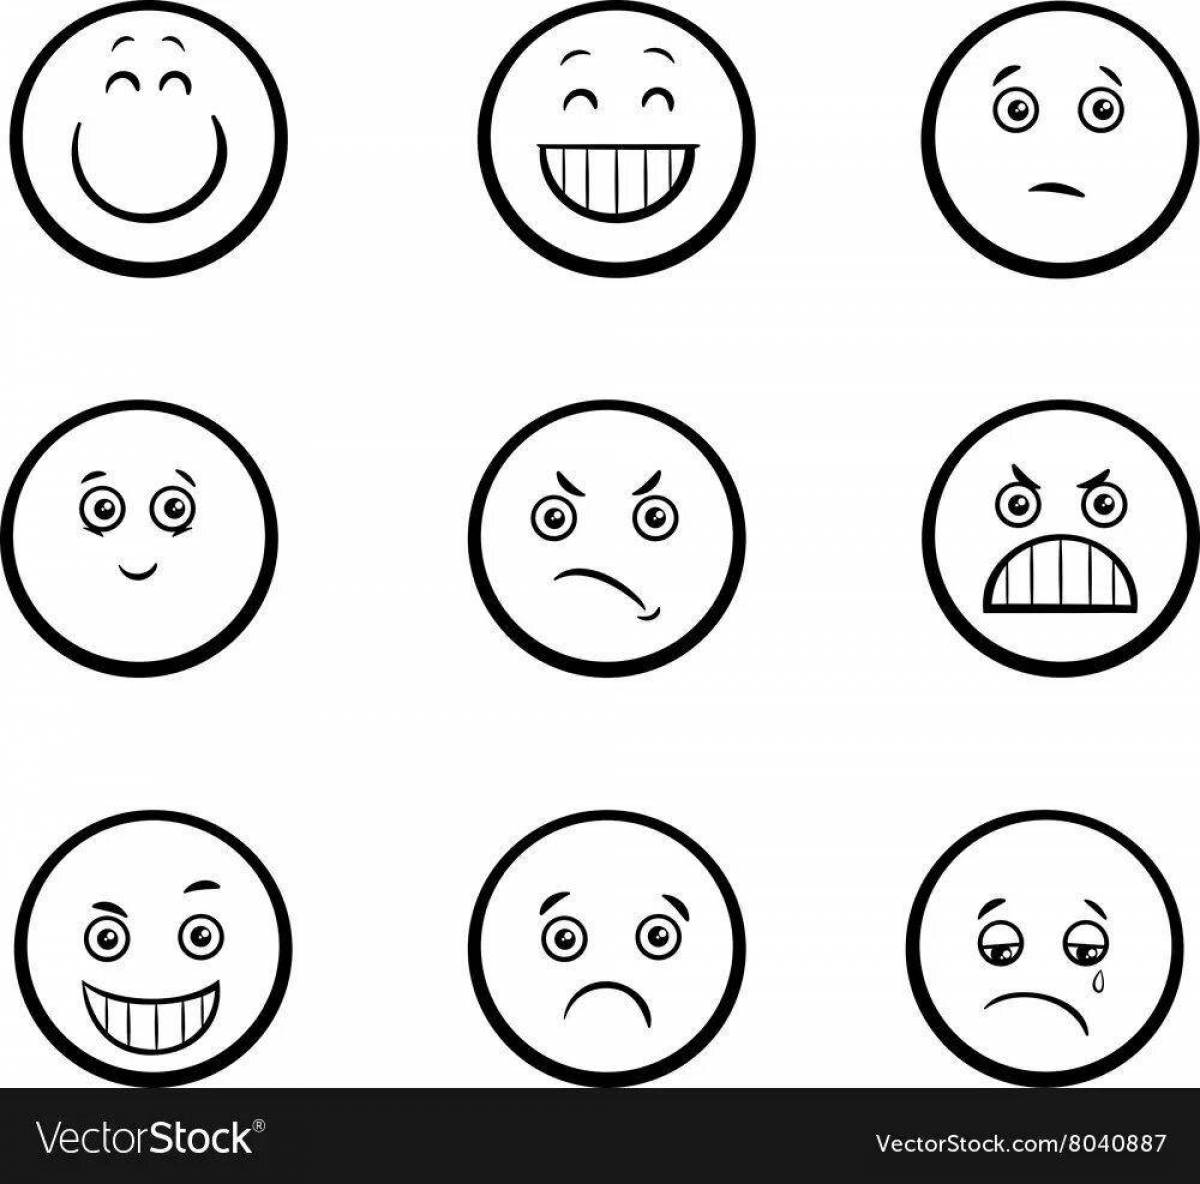 Annoyed emoji coloring page